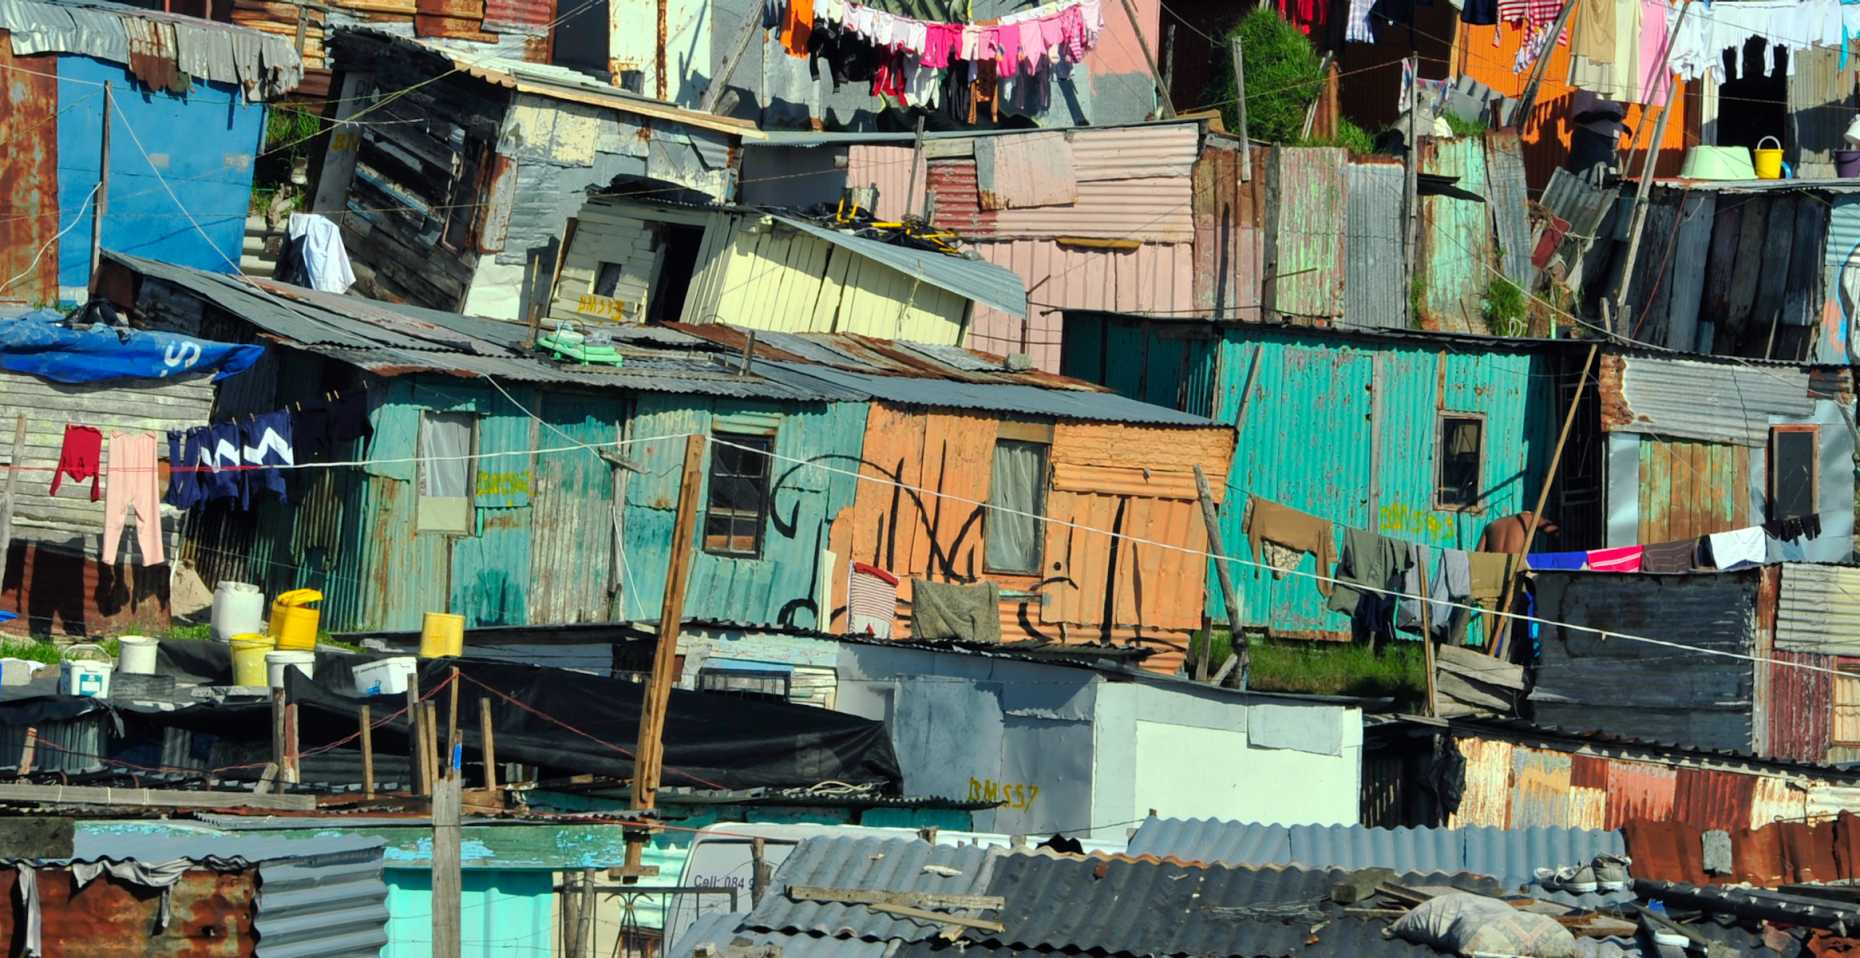 shacks in a slum